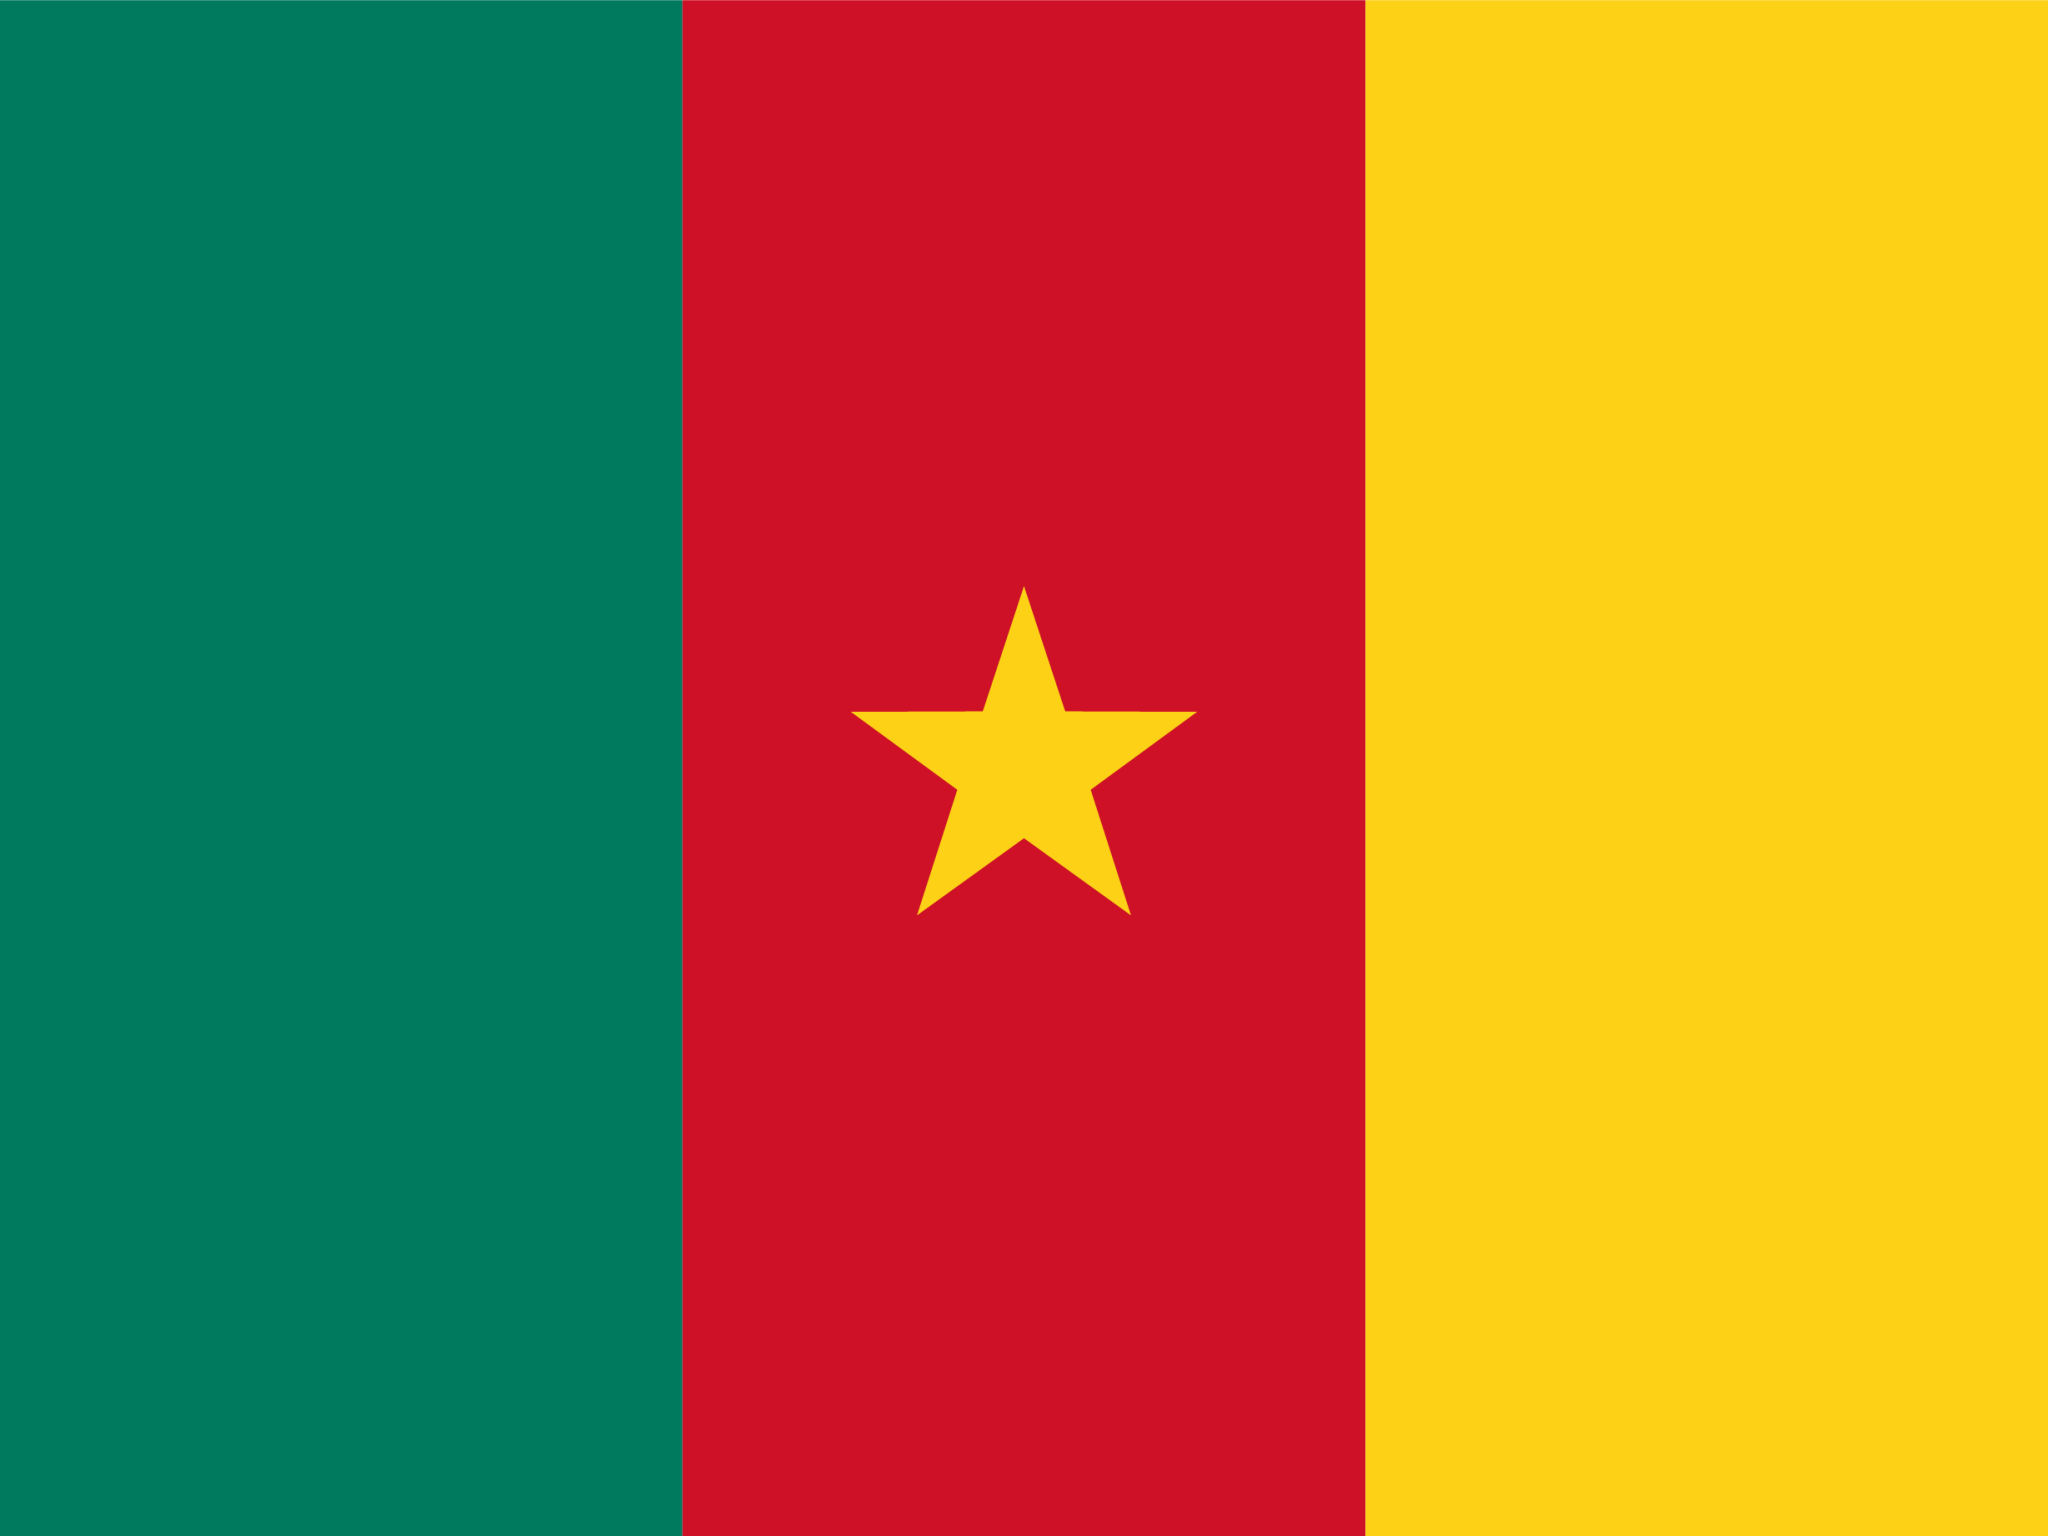 Cameroon icon